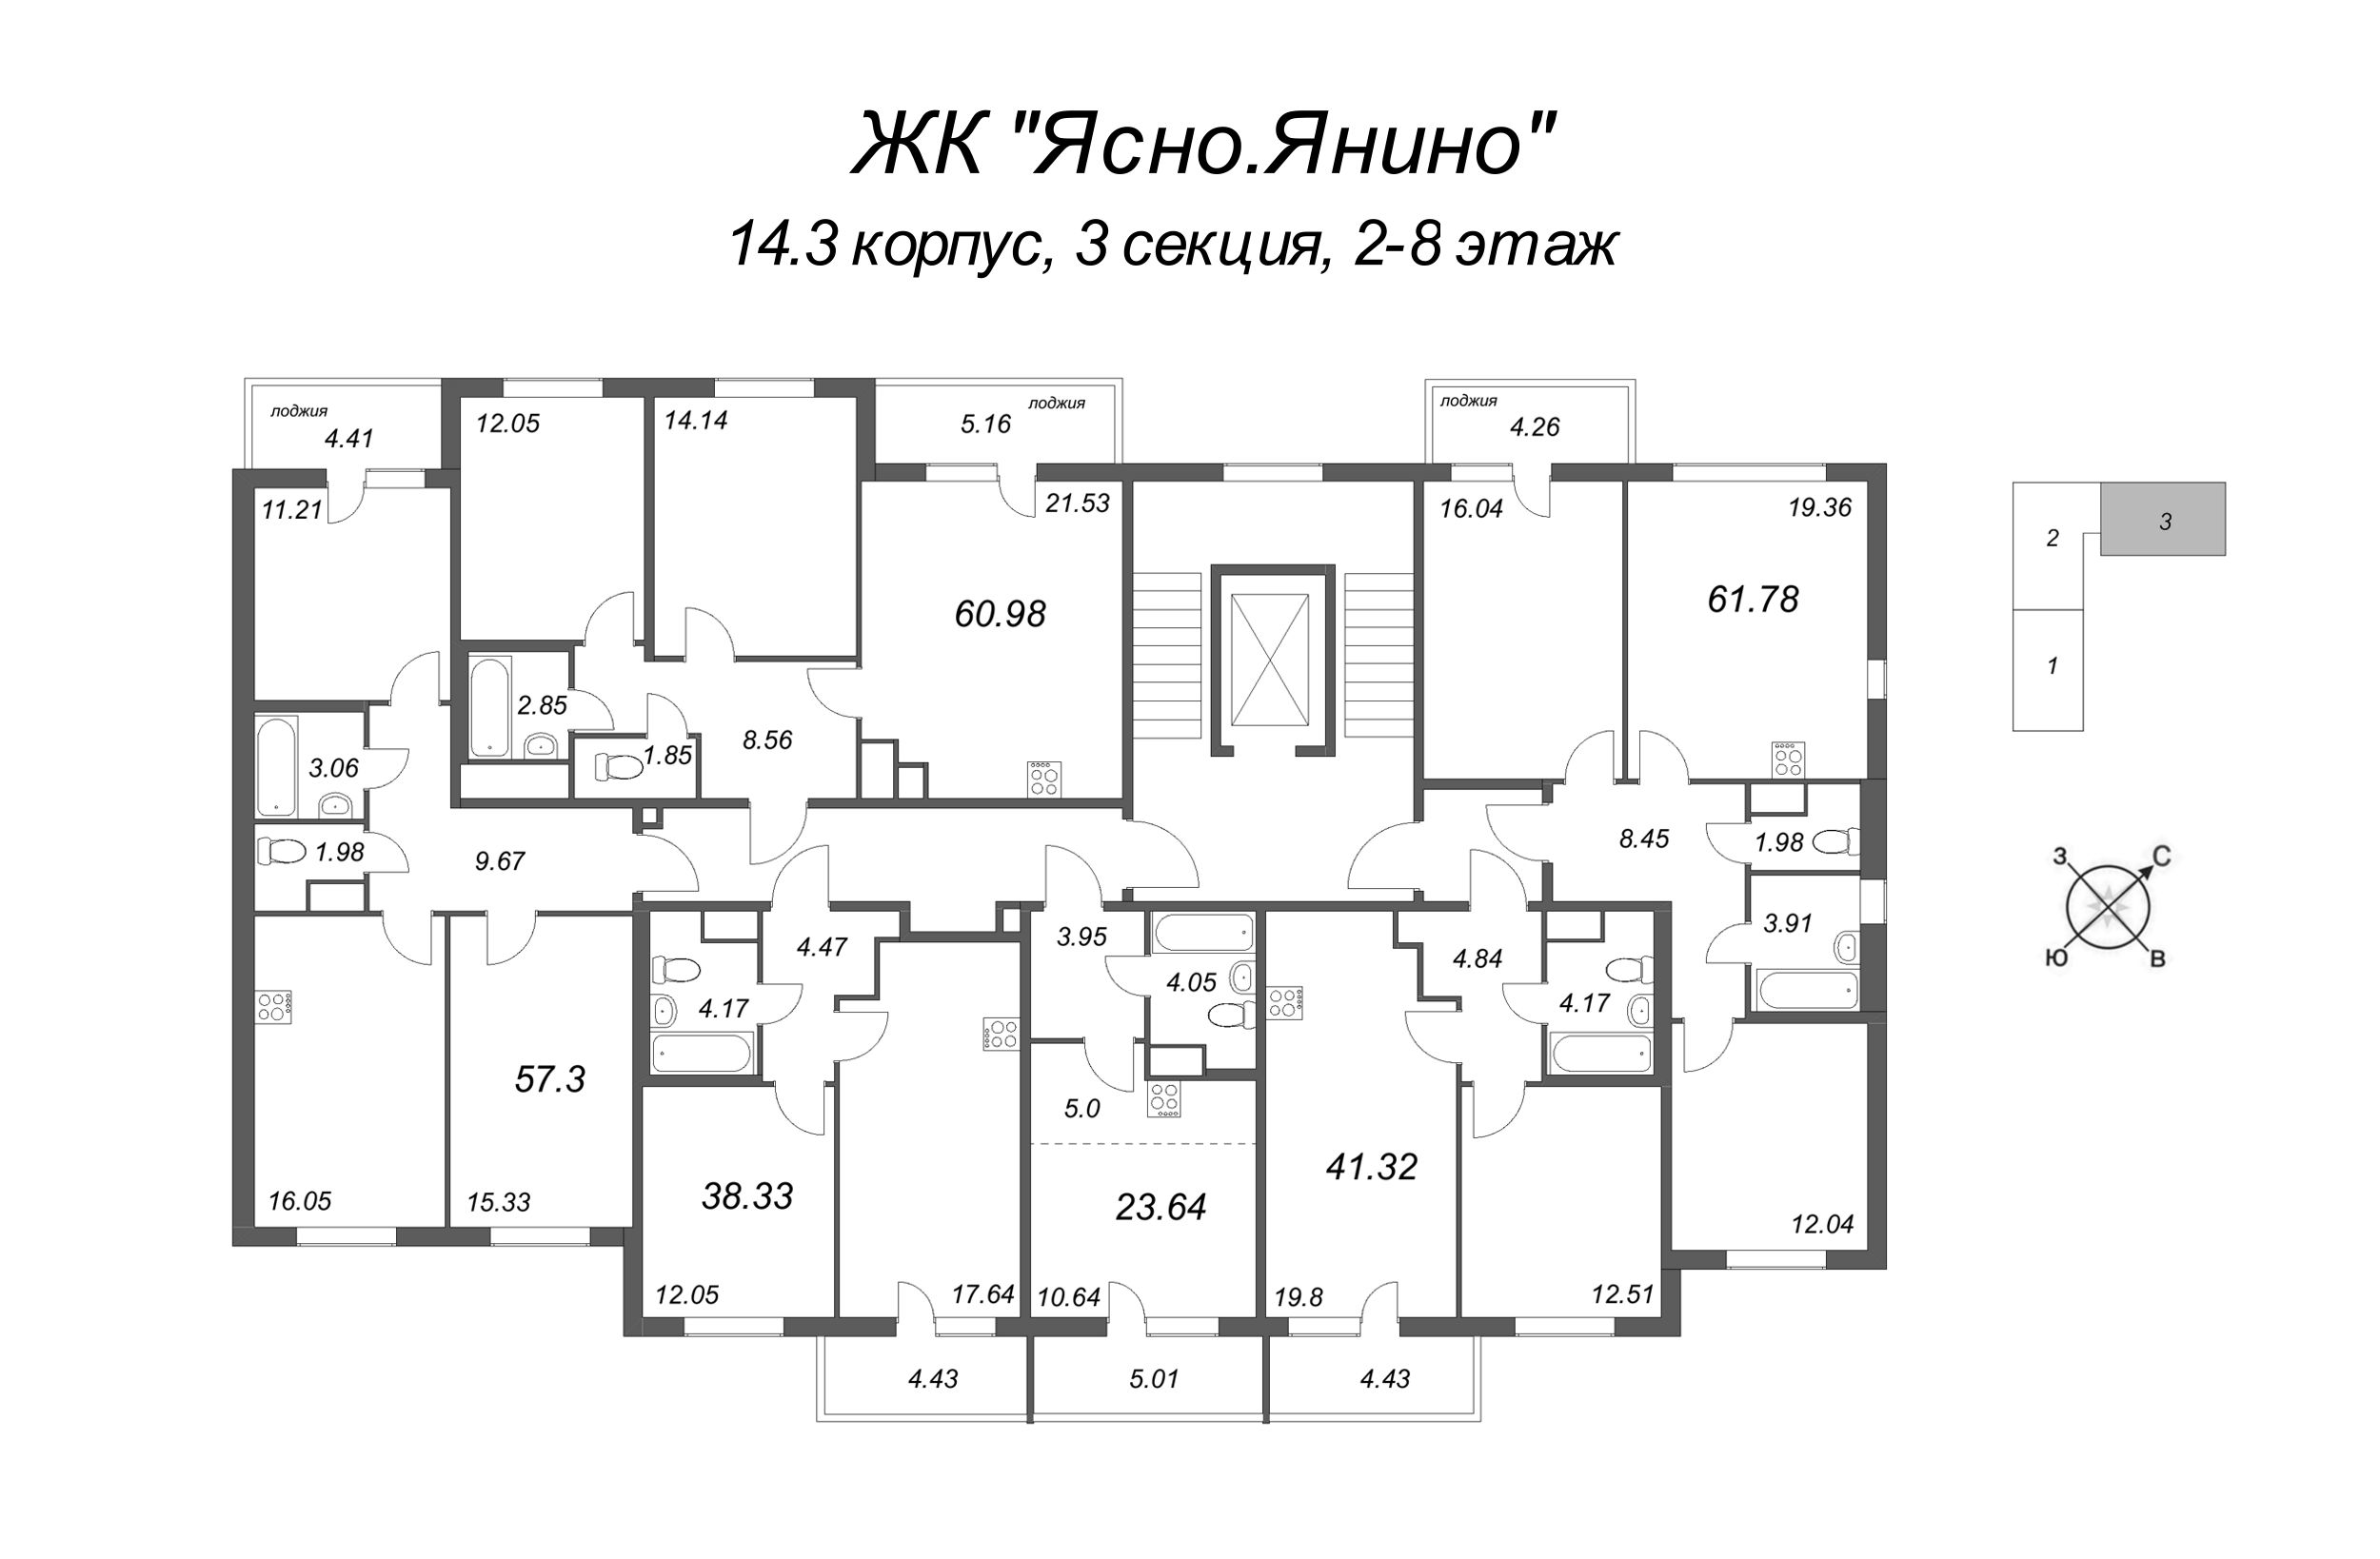 3-комнатная (Евро) квартира, 61.78 м² - планировка этажа